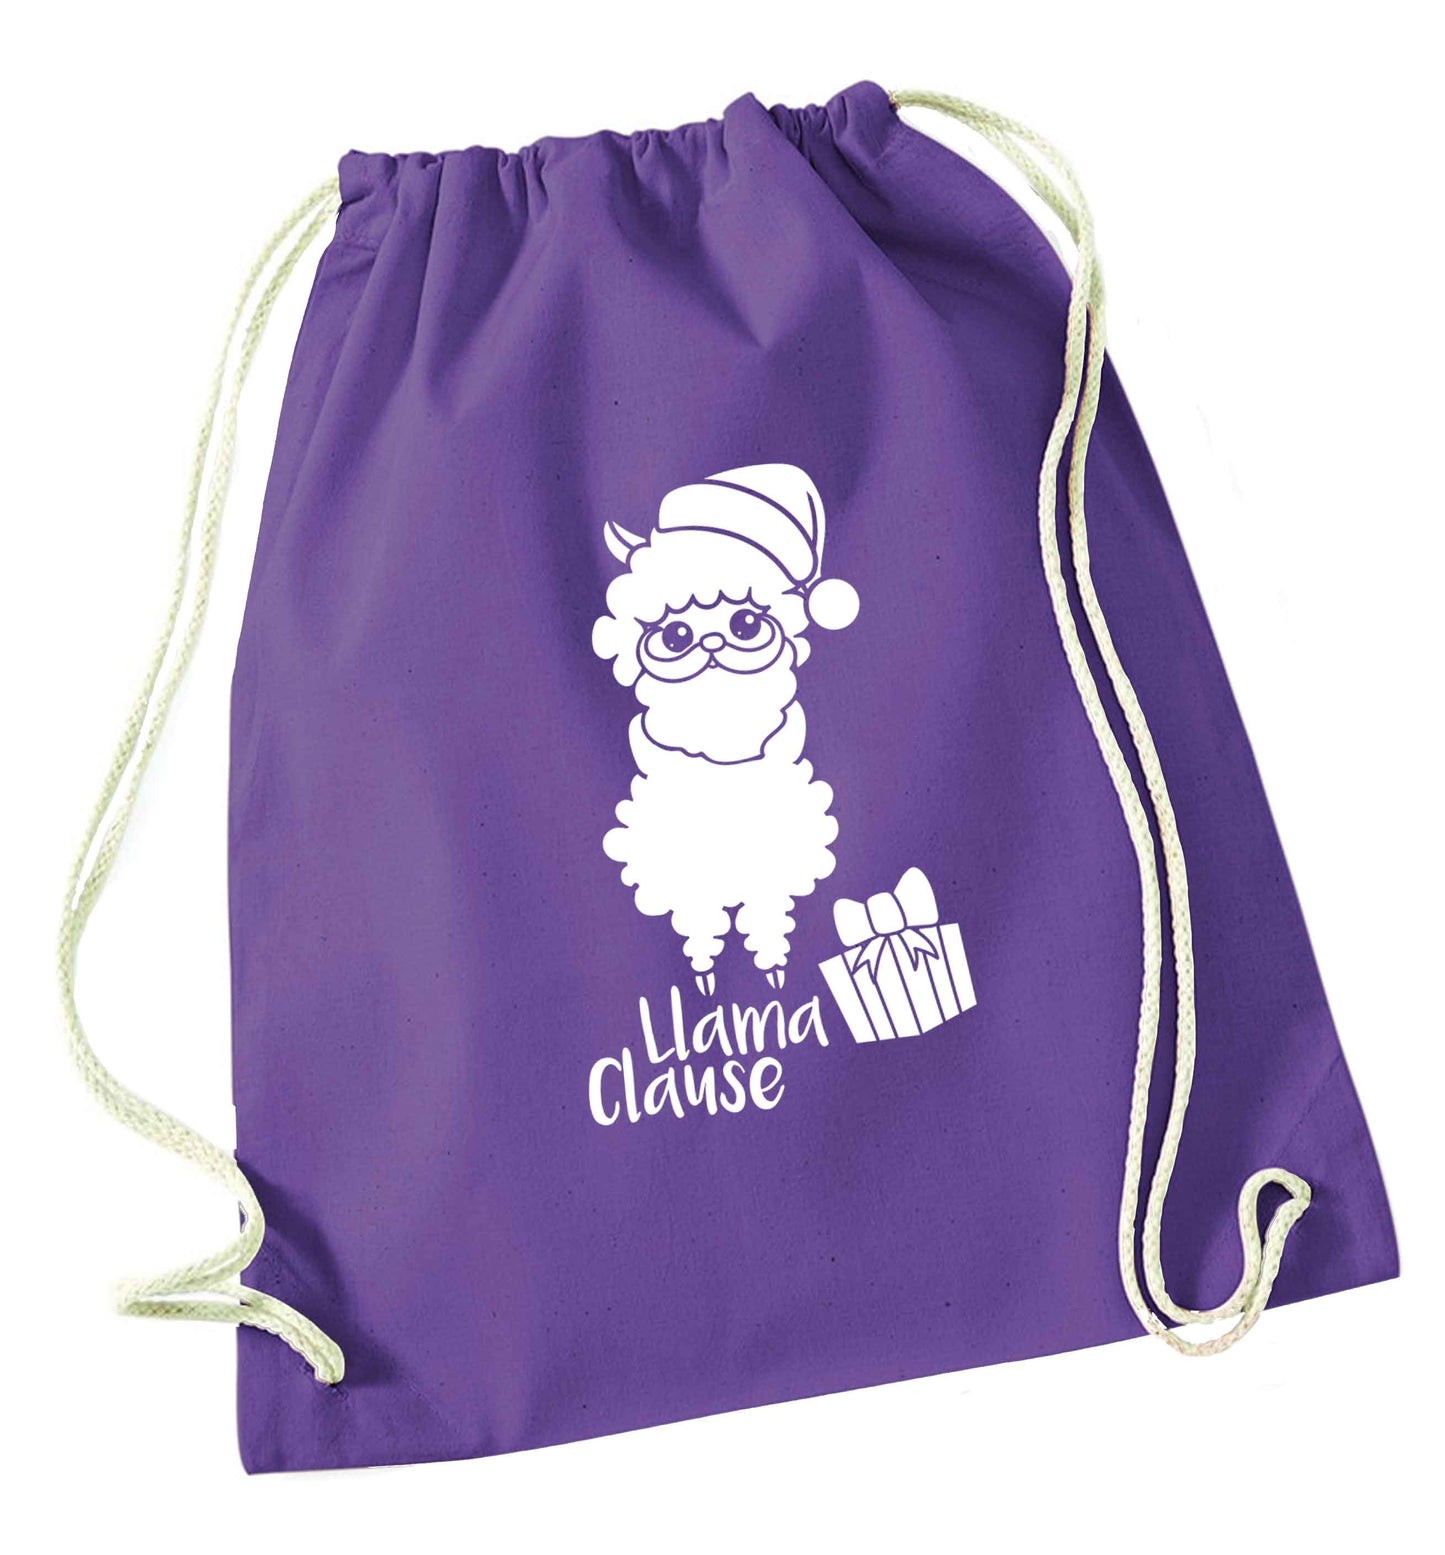 Llama Clause purple drawstring bag